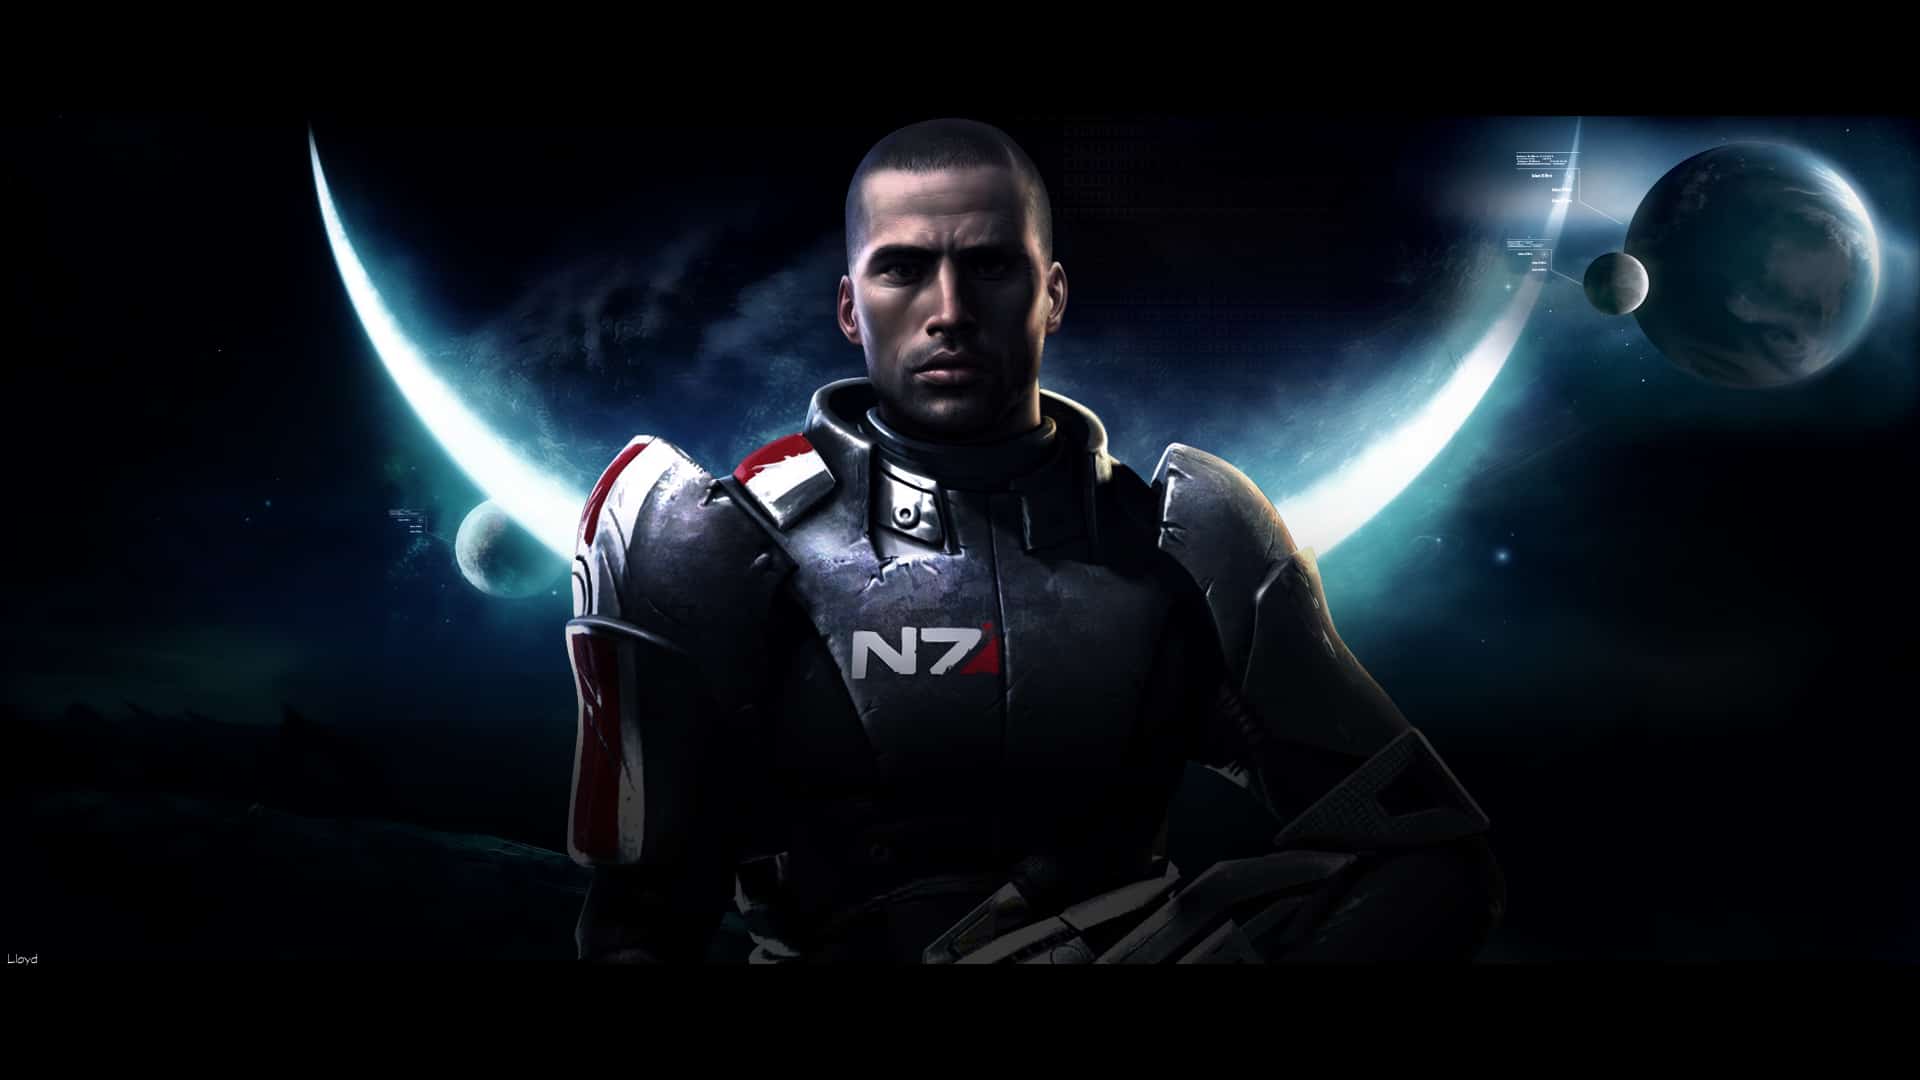 Mass Effect 3 Shepard Image